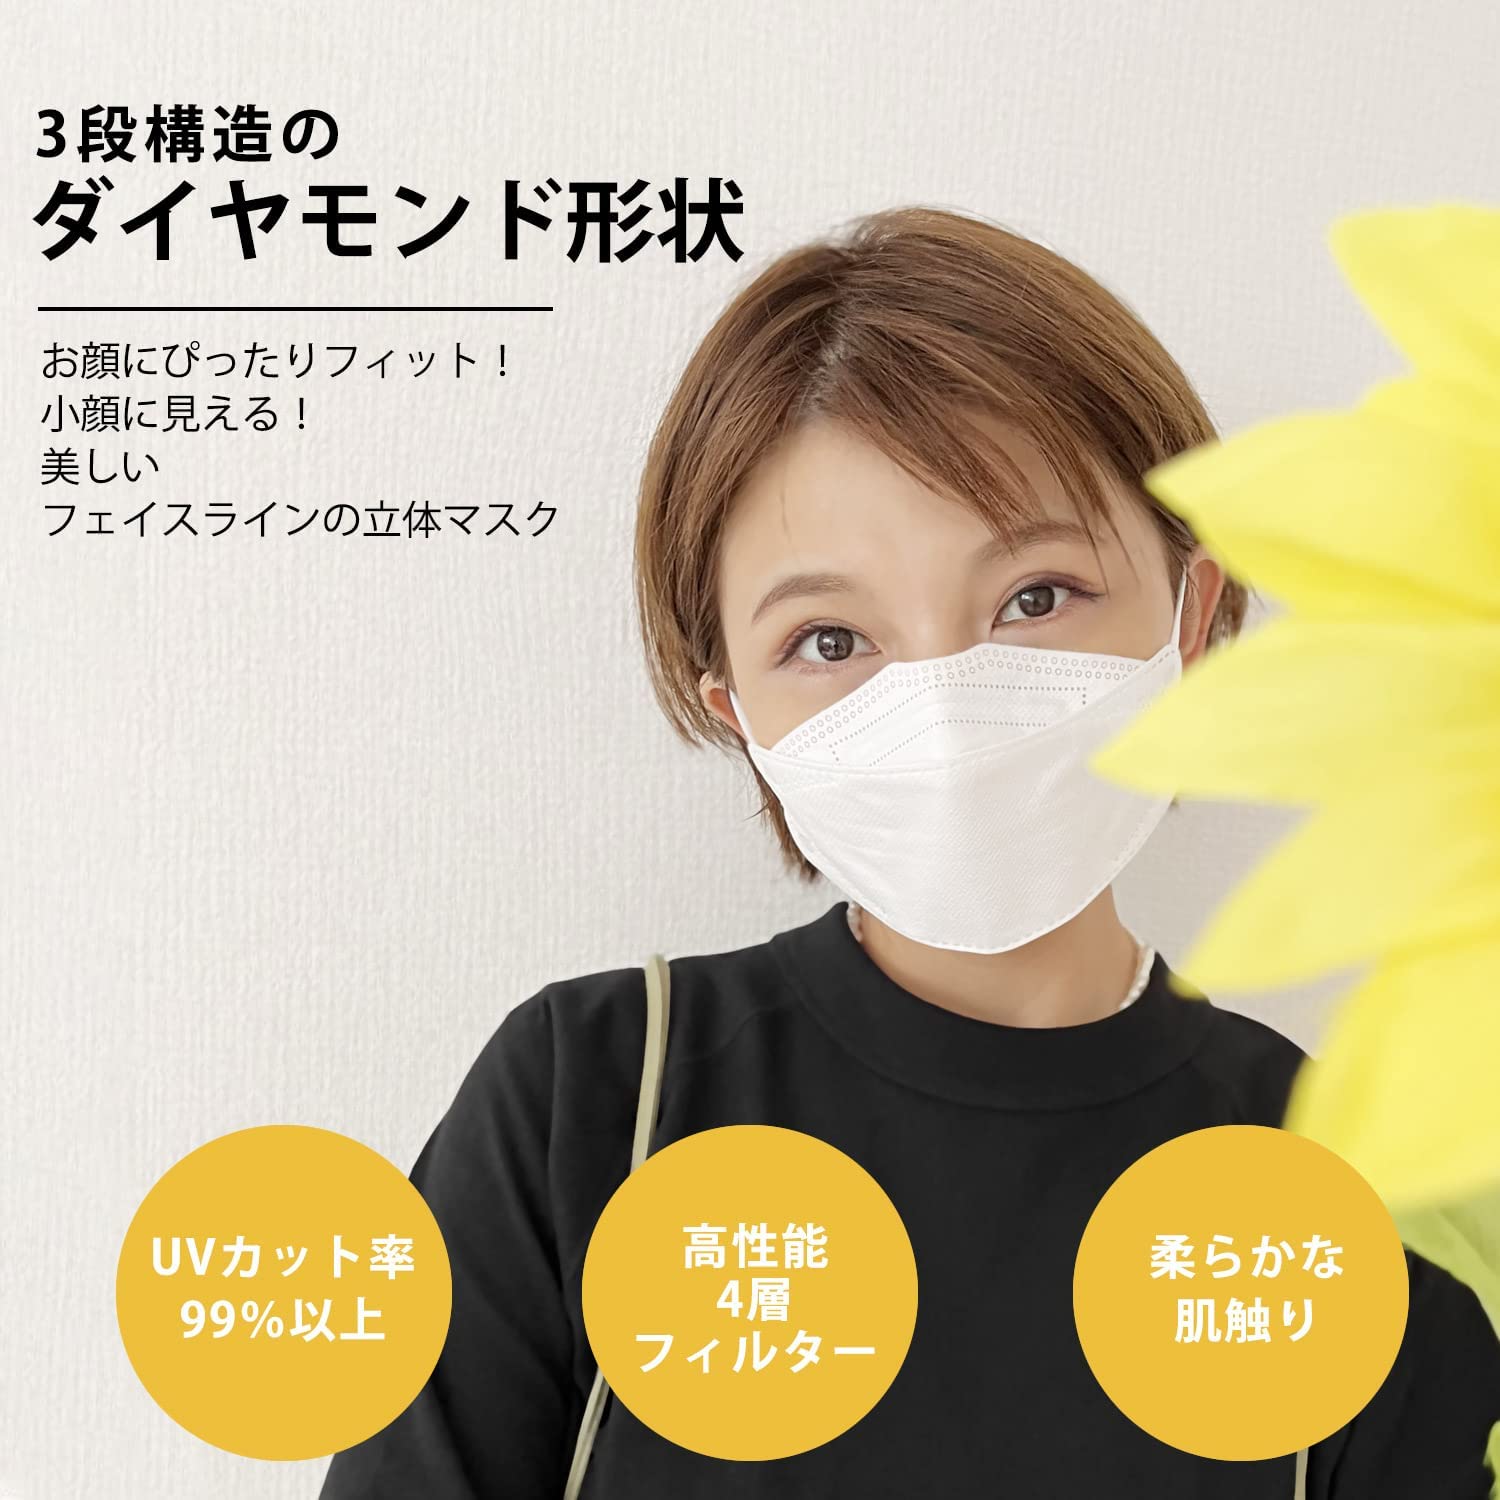 3dマスク 日本製 マスク jn95 3d立体型マスク KF94 A-JN95 個別包装 30枚入 不織布マスク 日本製マスク カラー 99%カット メイクが落ちにくい 花粉 風邪 不織布 男女兼用 大人 子供 4層 ラッピング包装